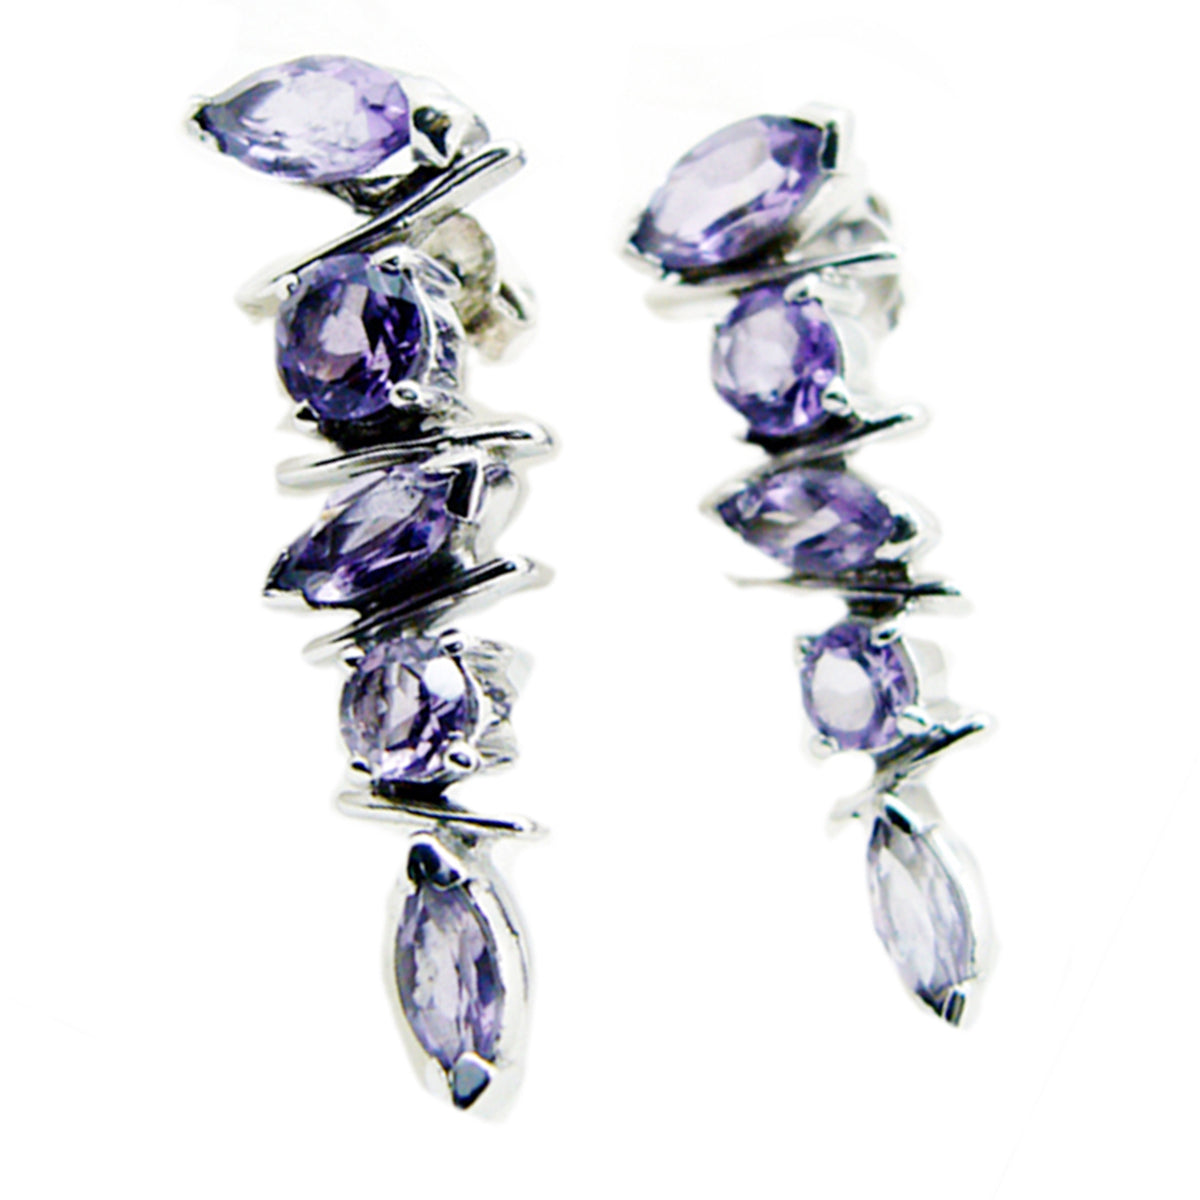 Riyo Natural Gemstone multi shape Faceted Purple Amethyst Silver Earrings gift for easter Sunday